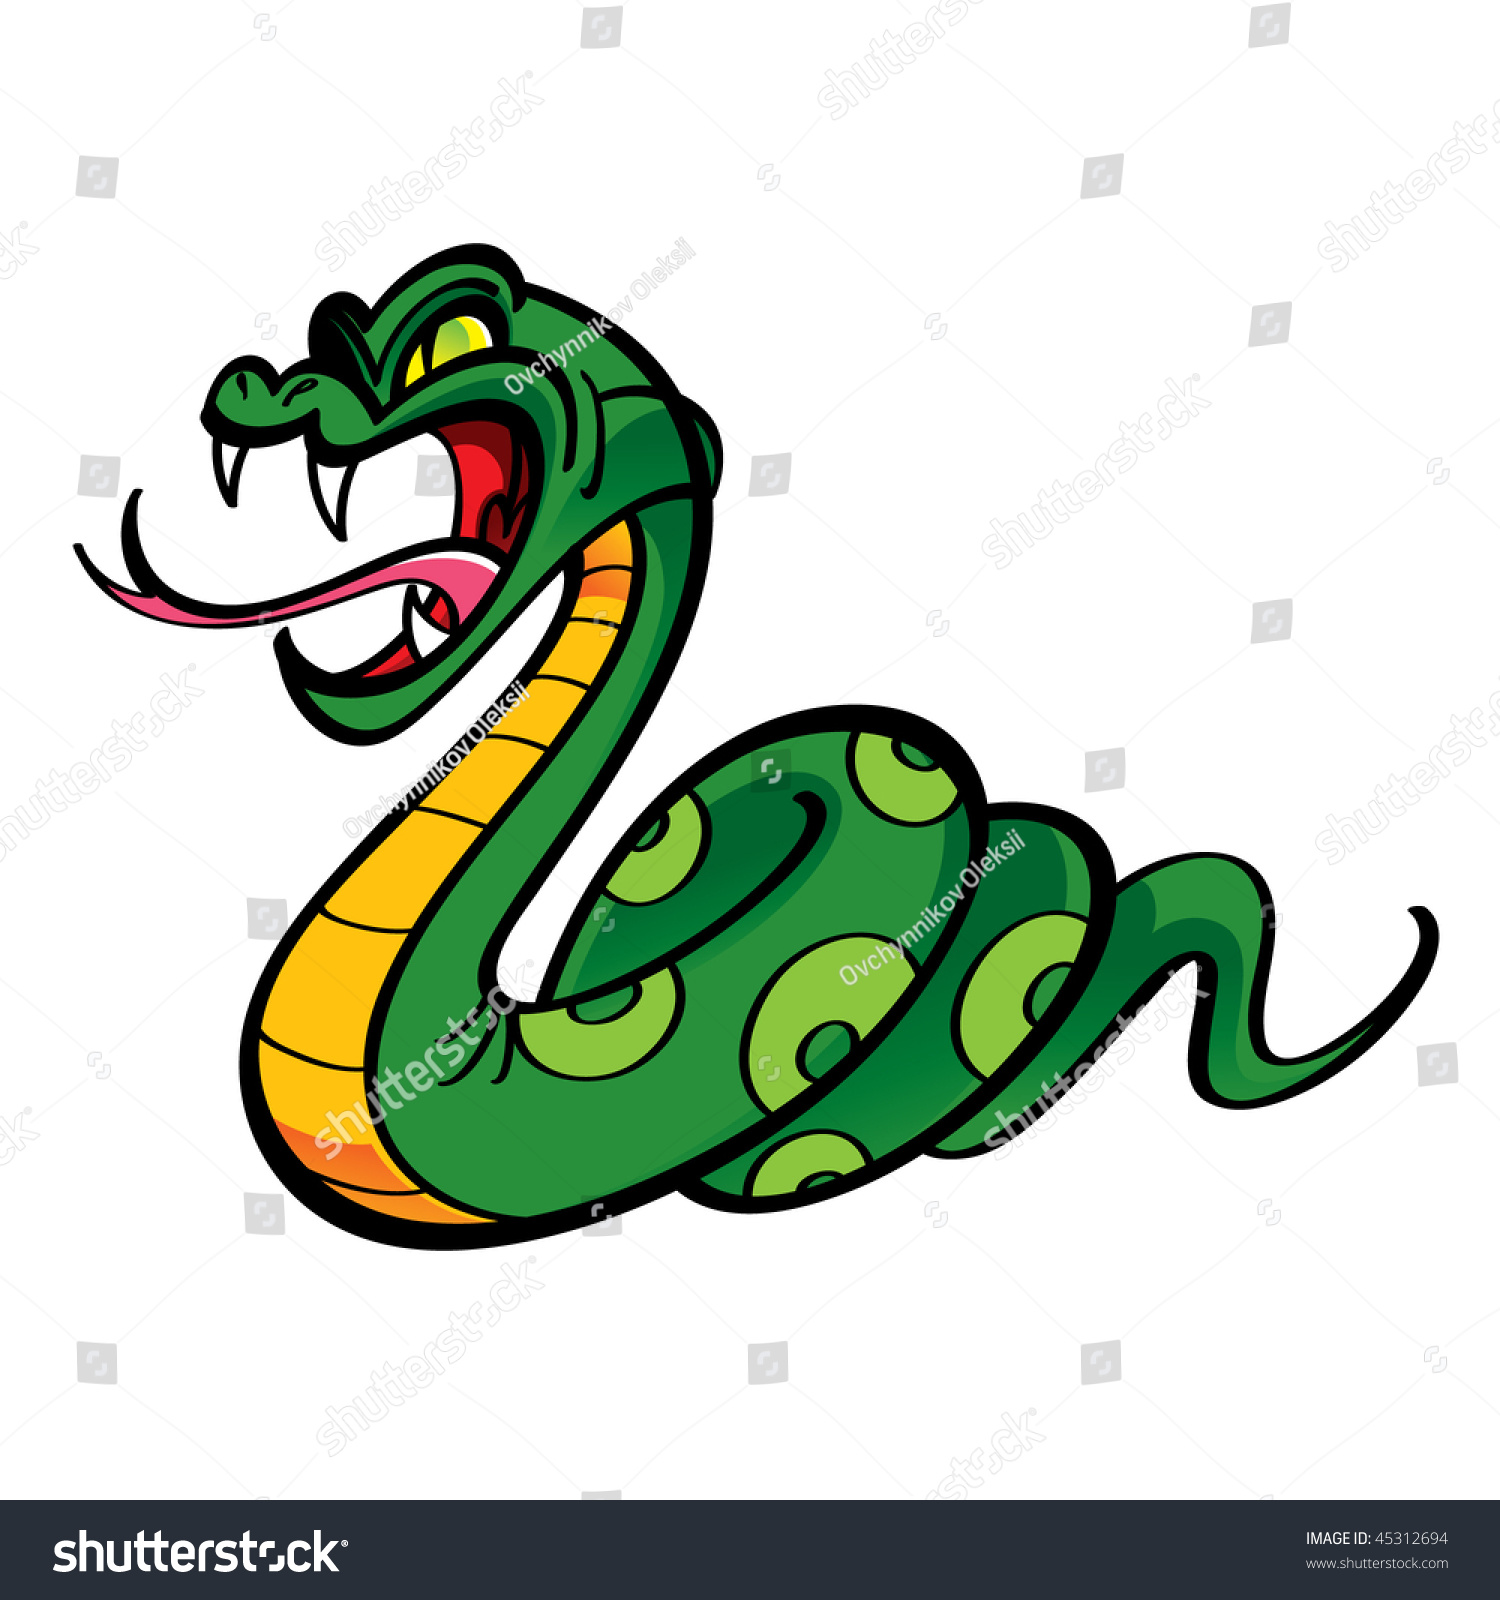 SVG of Angry Snake svg